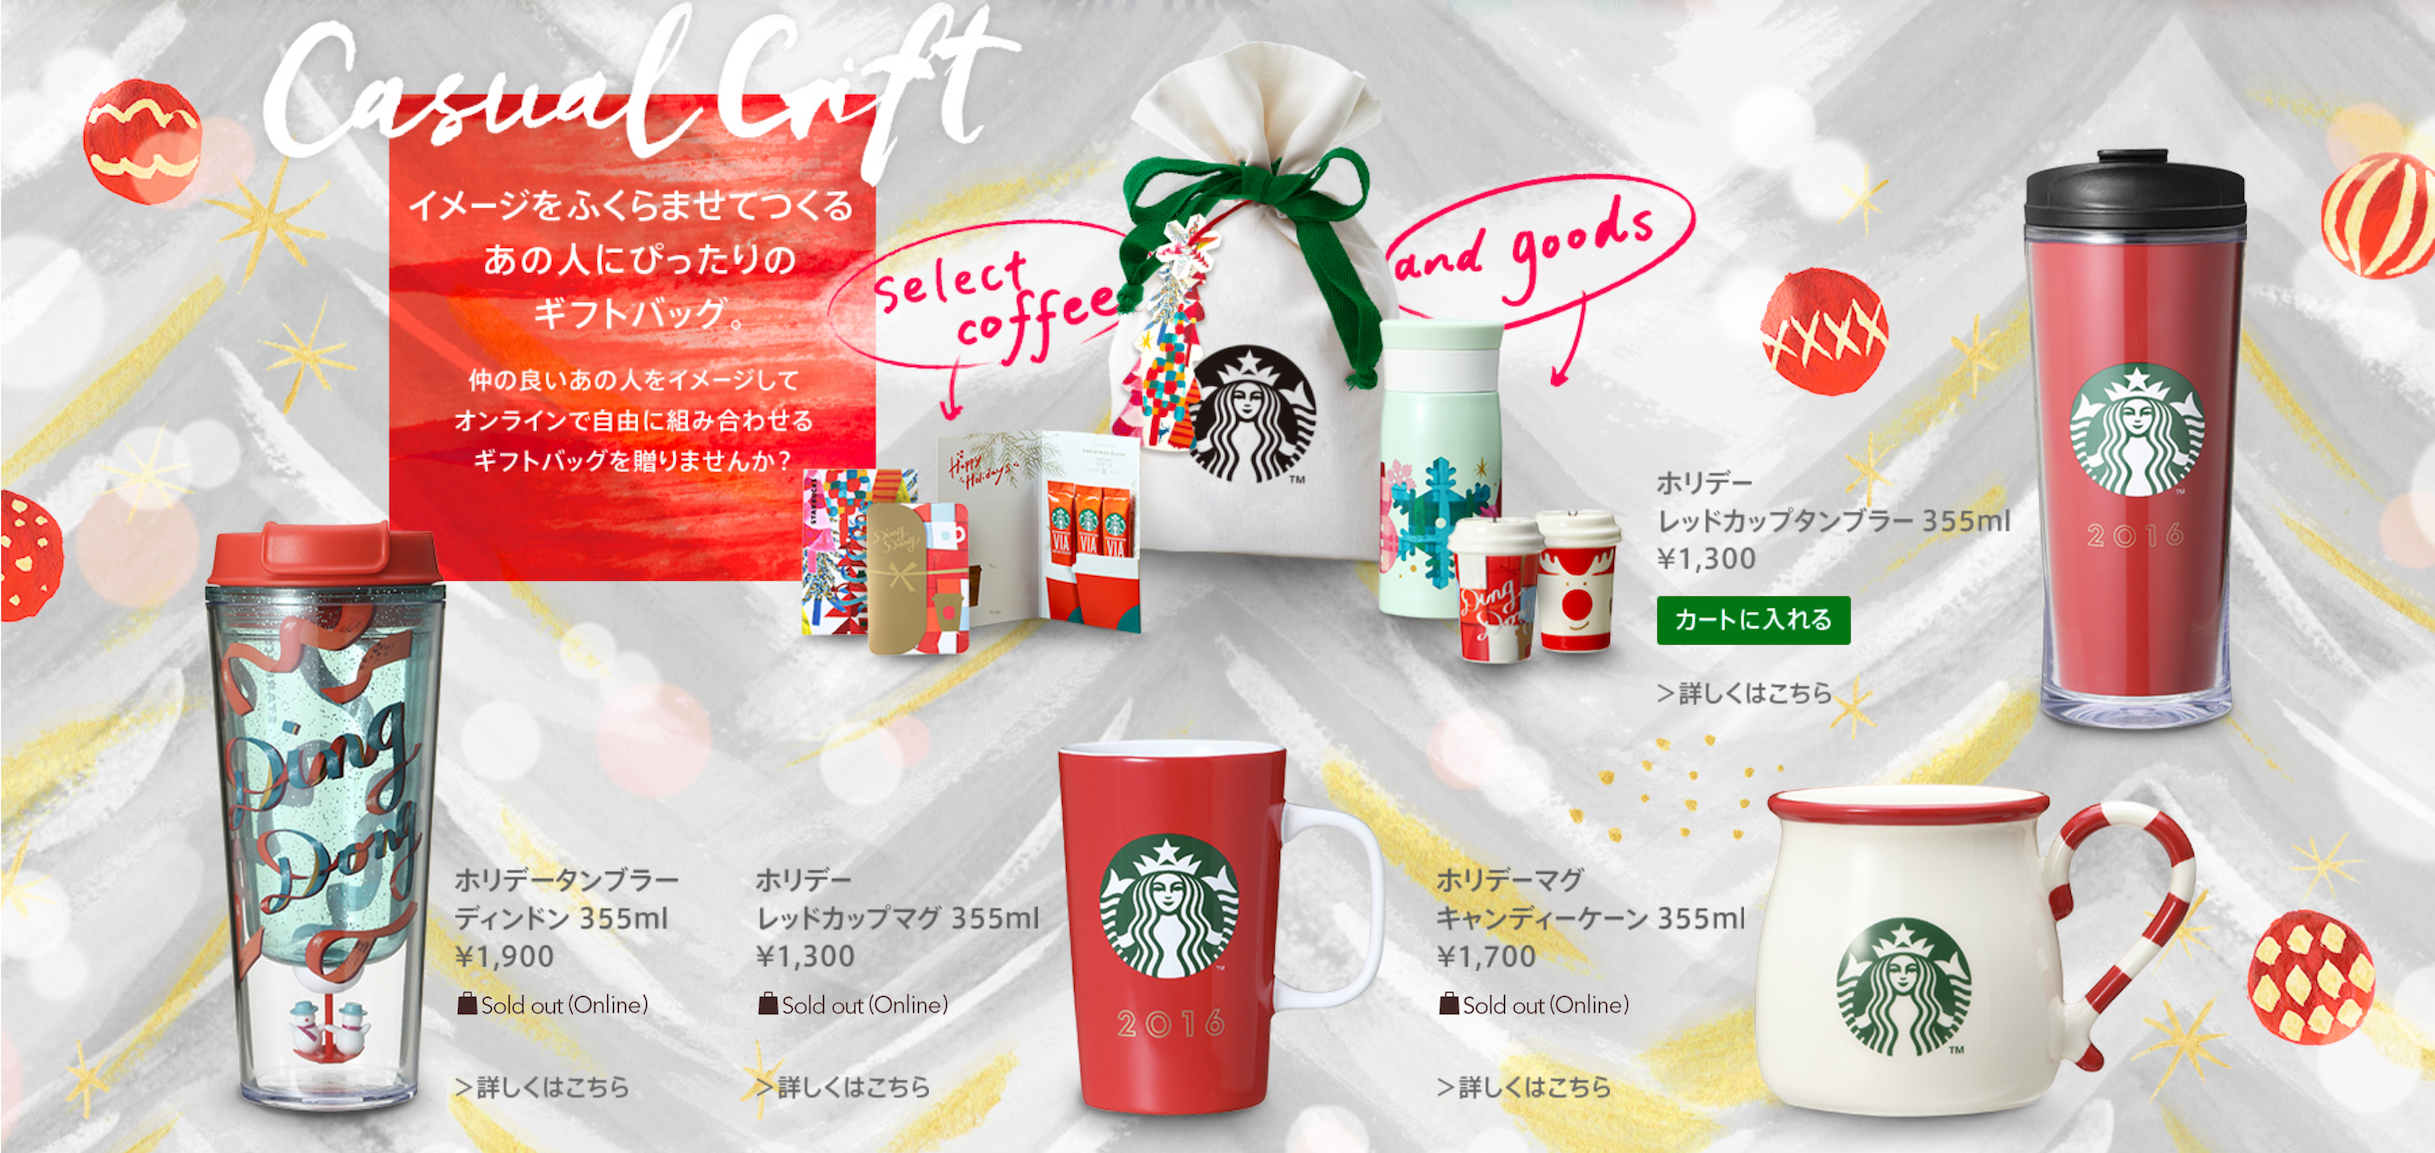 圖片來源：Starbucks Coffee Japan